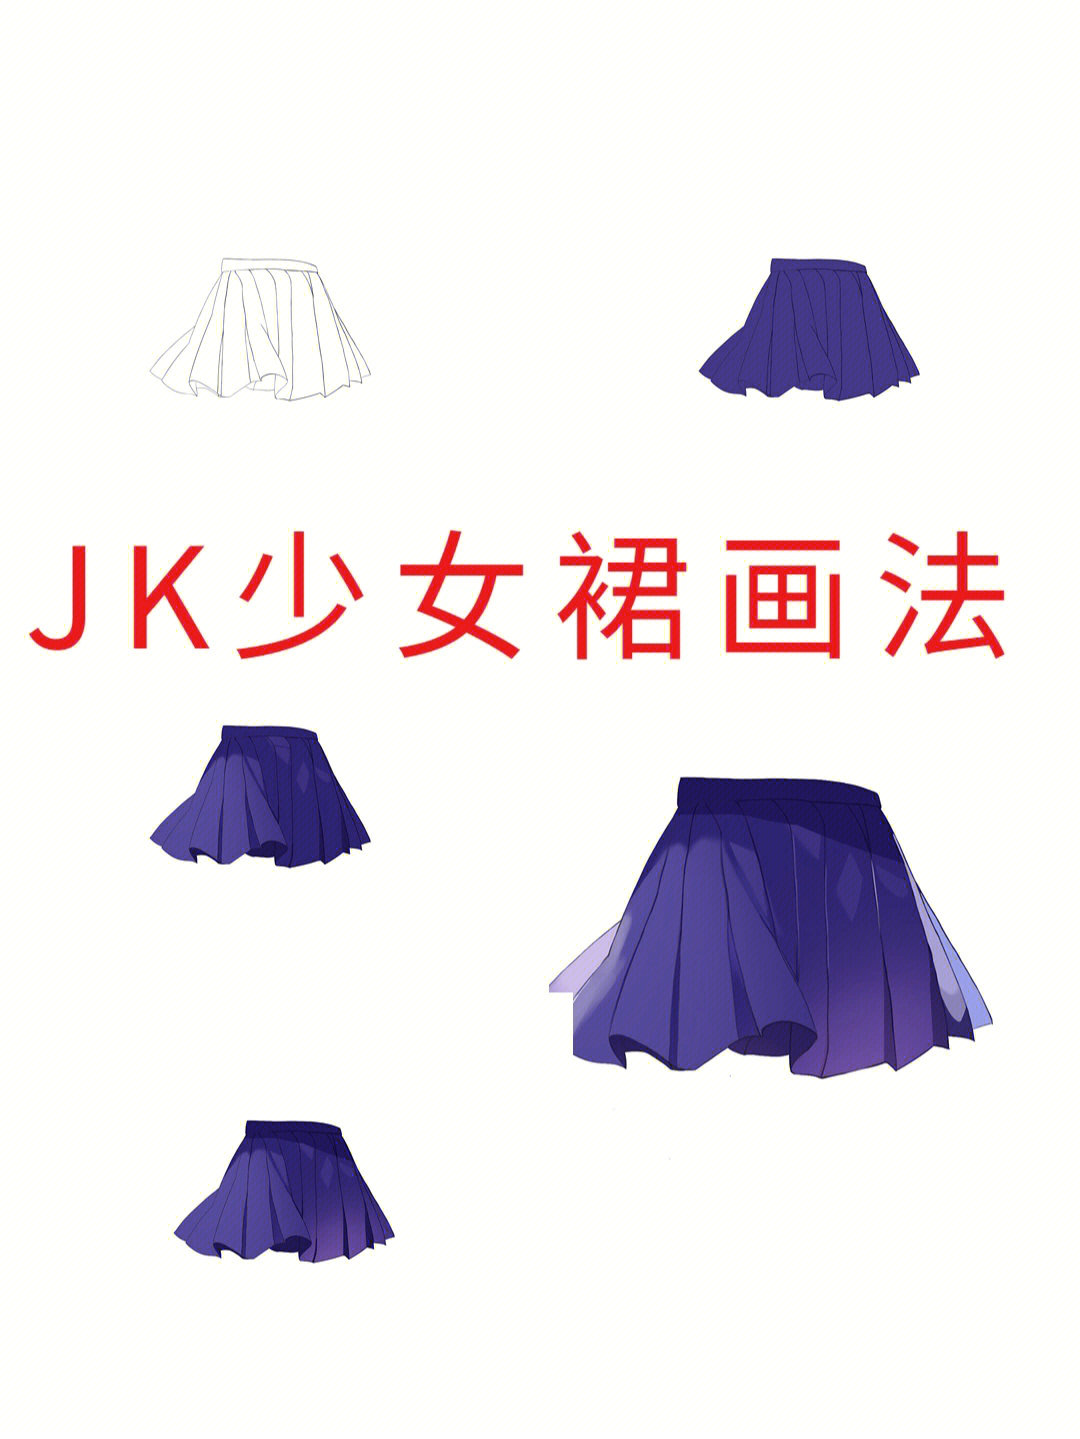 jk的裙子绘画图片